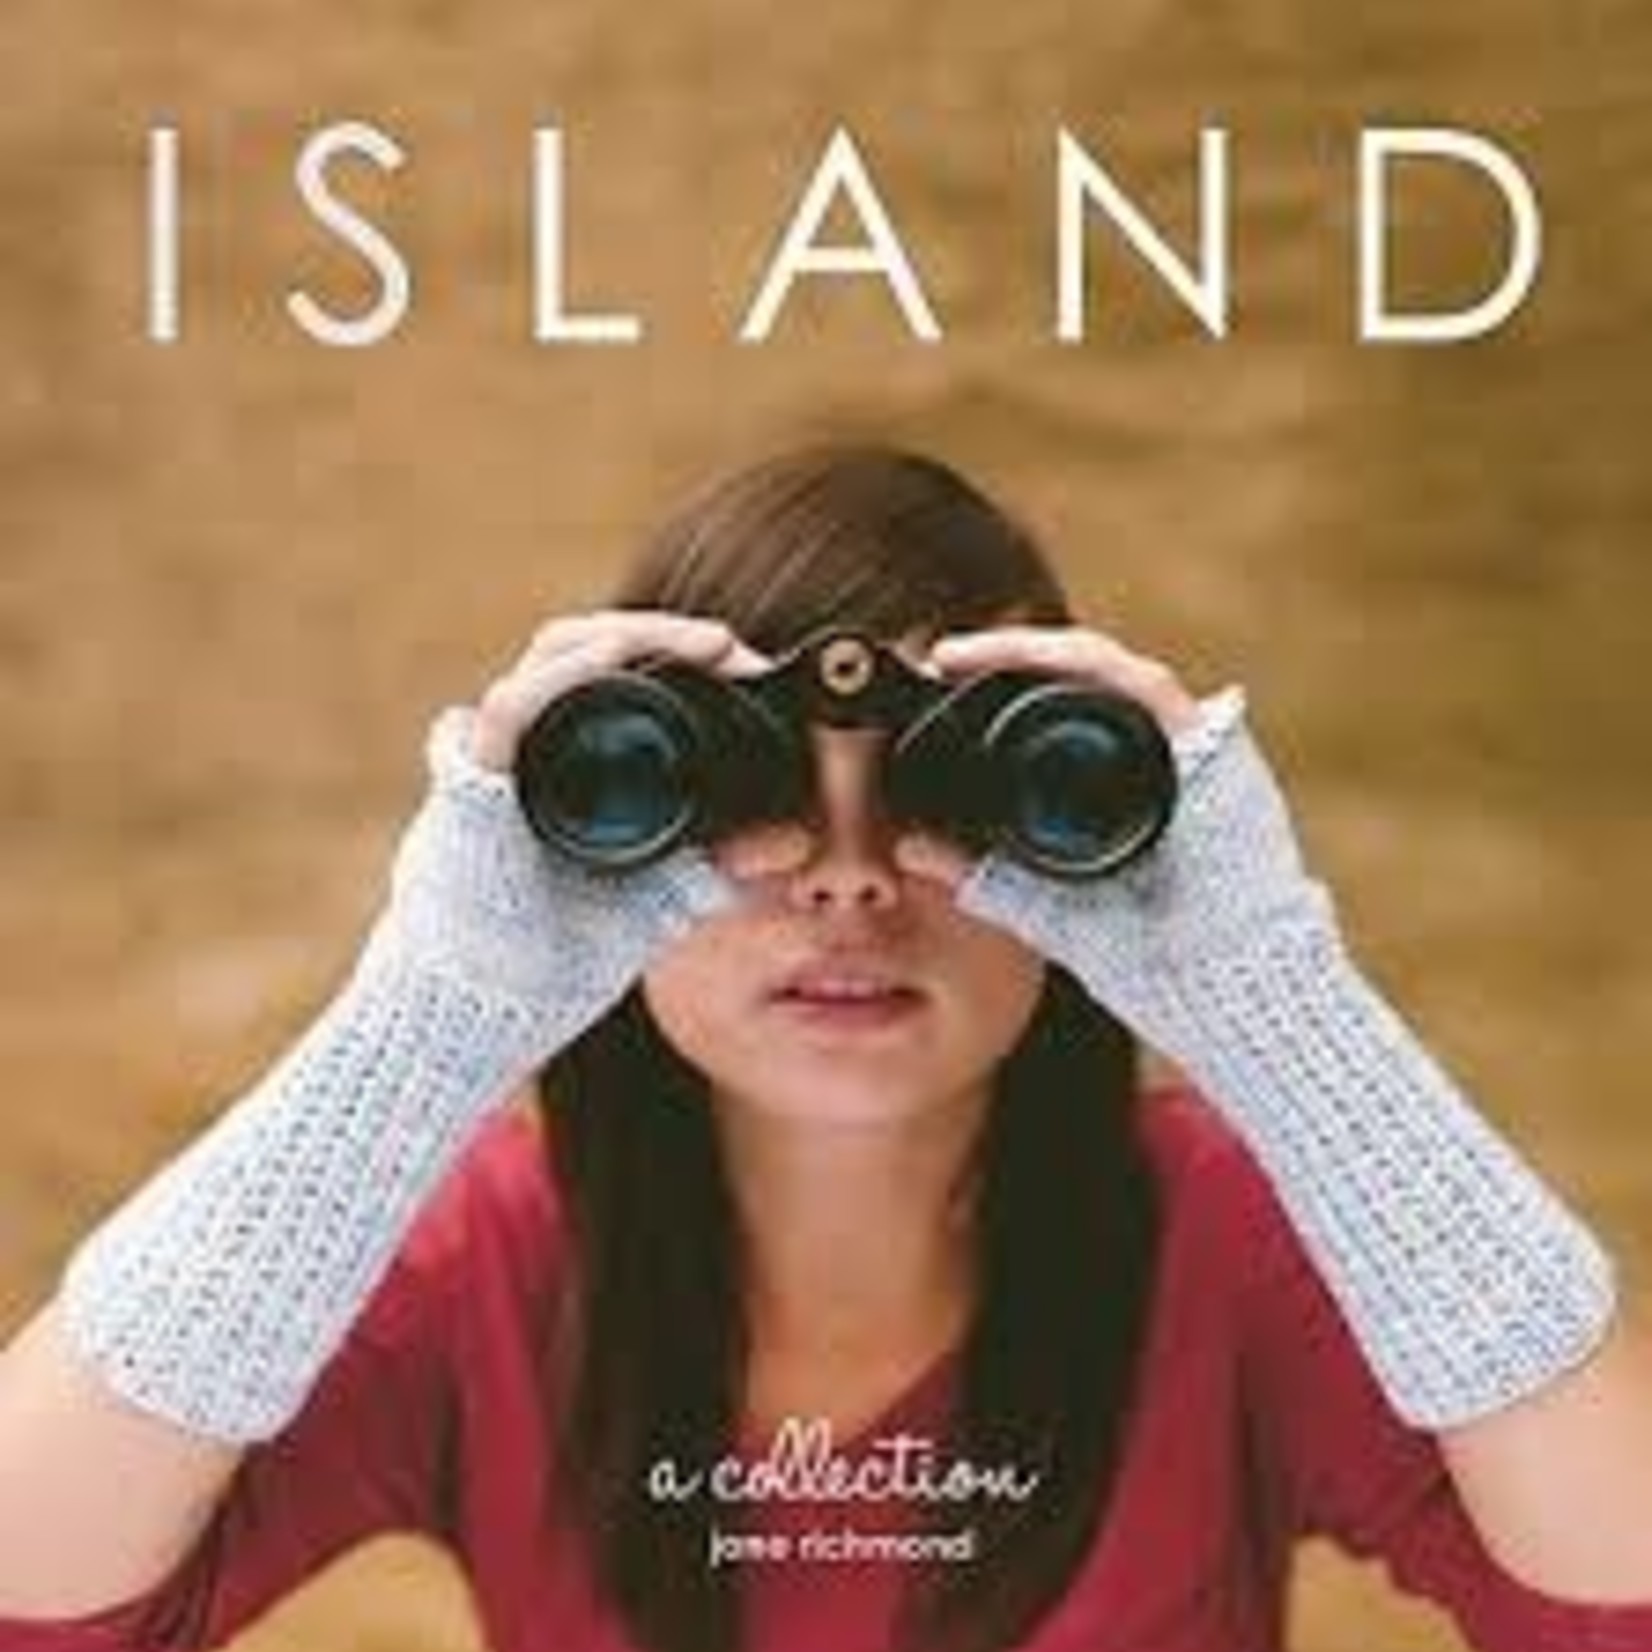 Book - Island by Jane Richmond